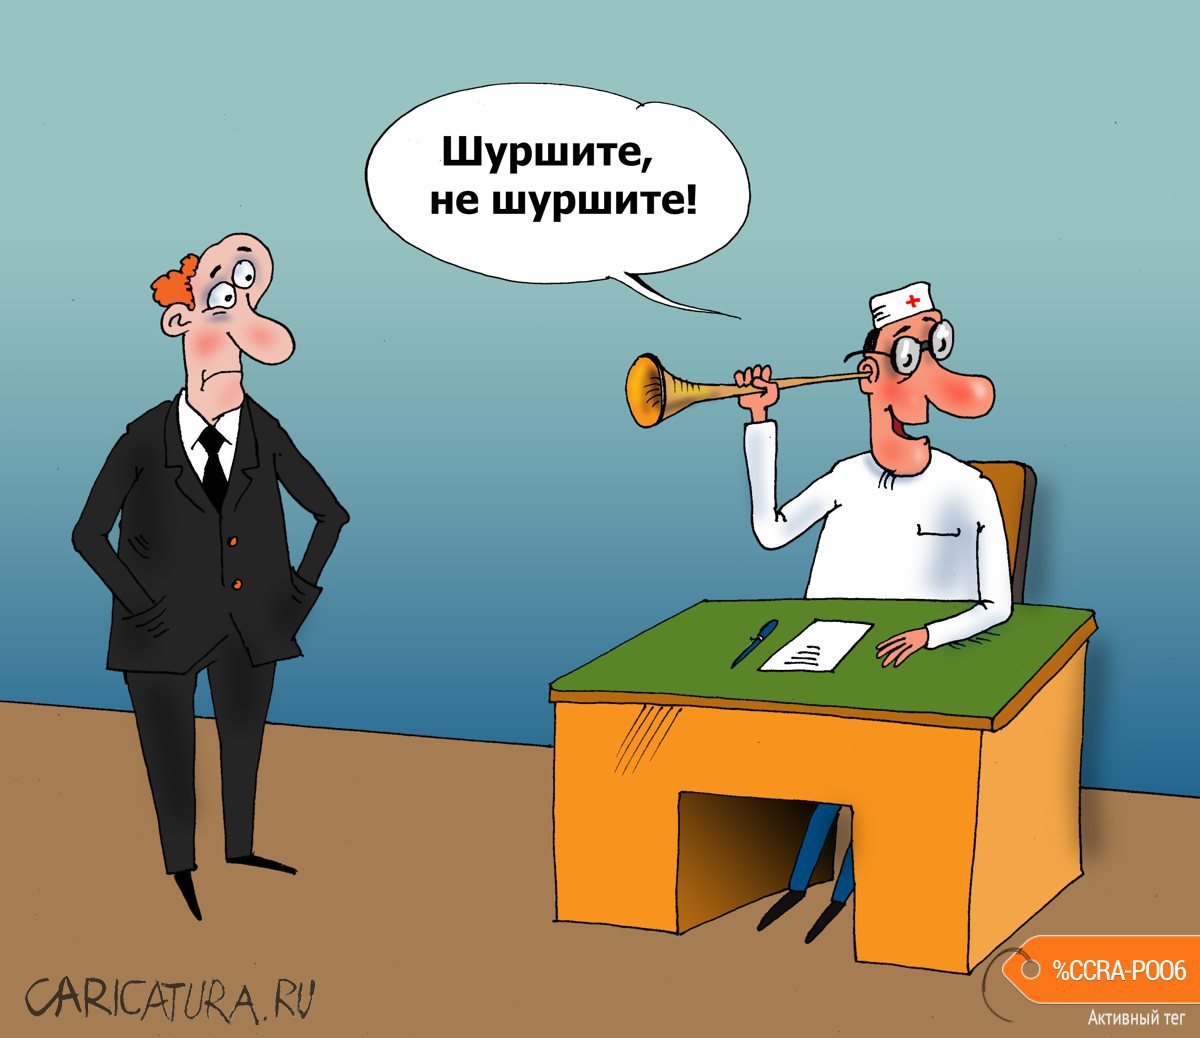 Карикатура "Денежки", Валерий Тарасенко